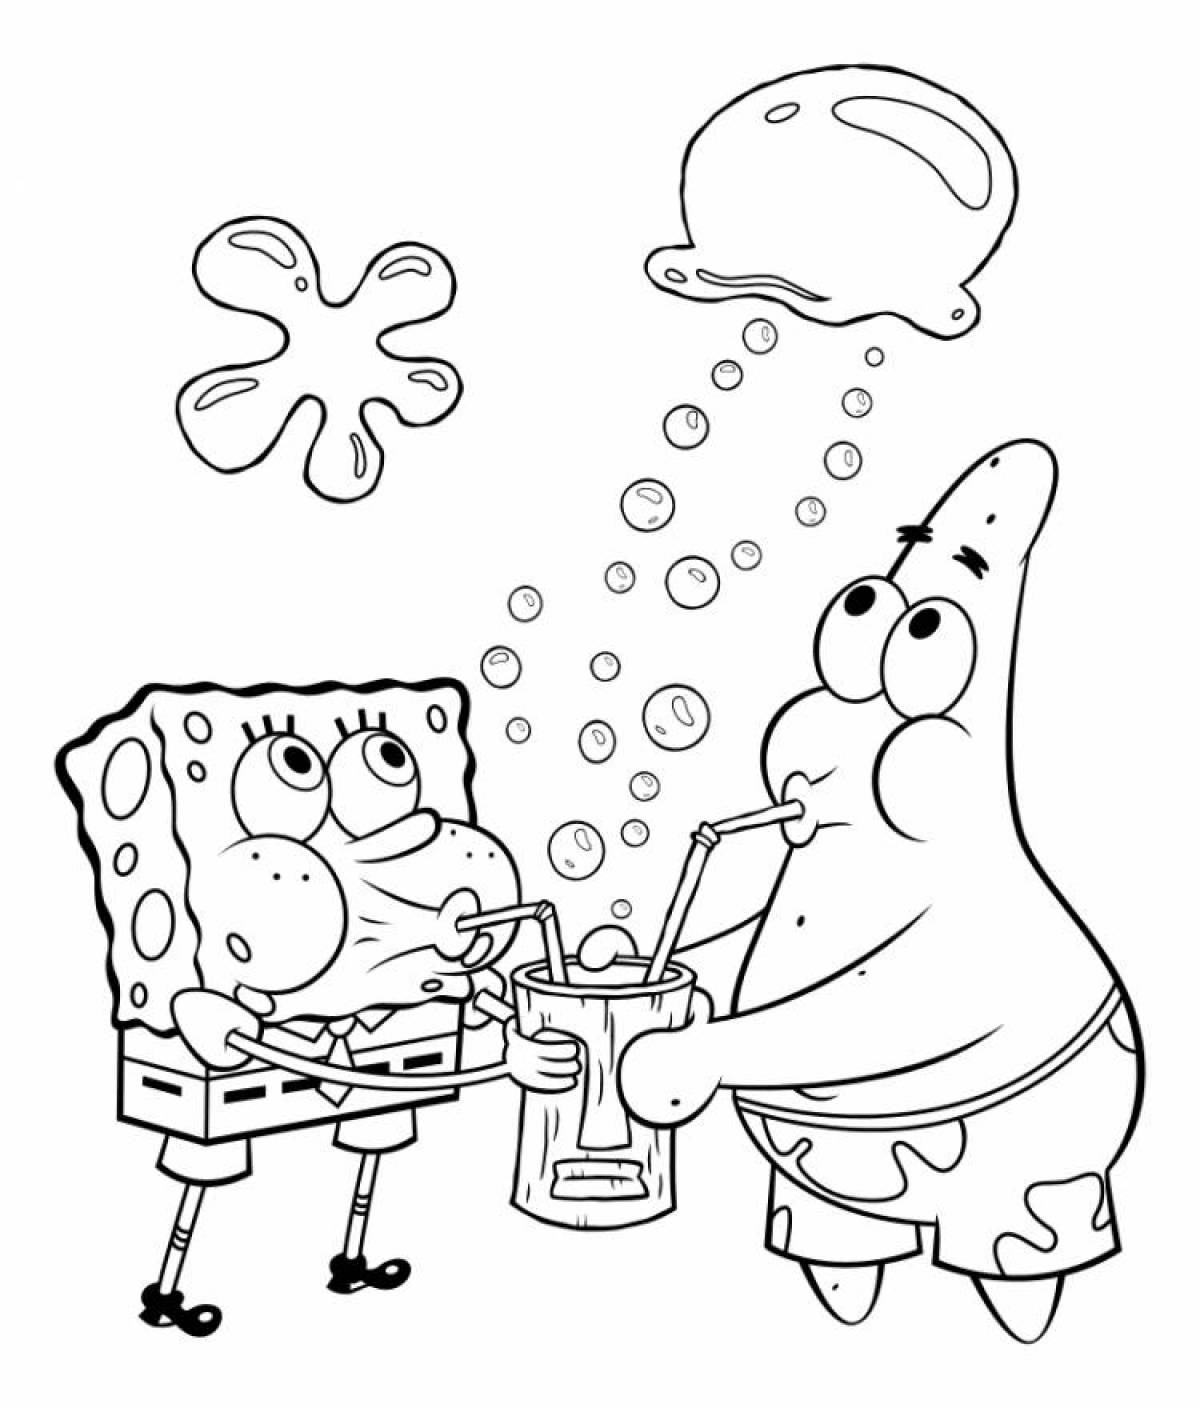 Spongebob live coloring page